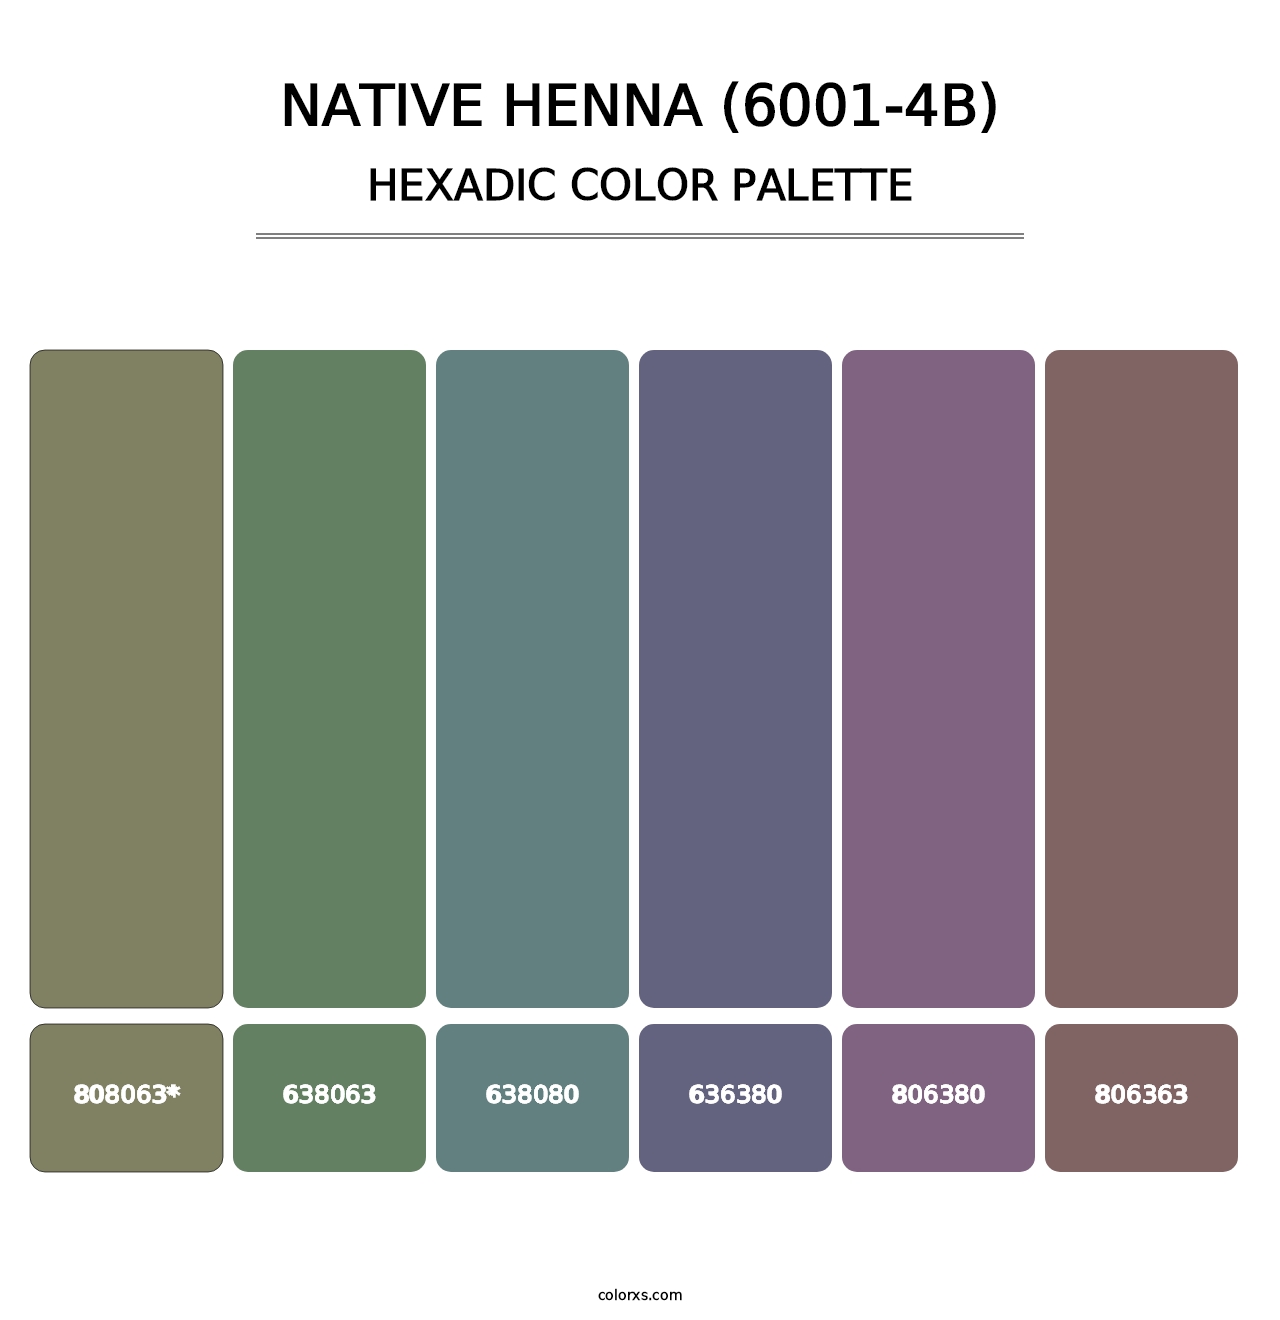 Native Henna (6001-4B) - Hexadic Color Palette